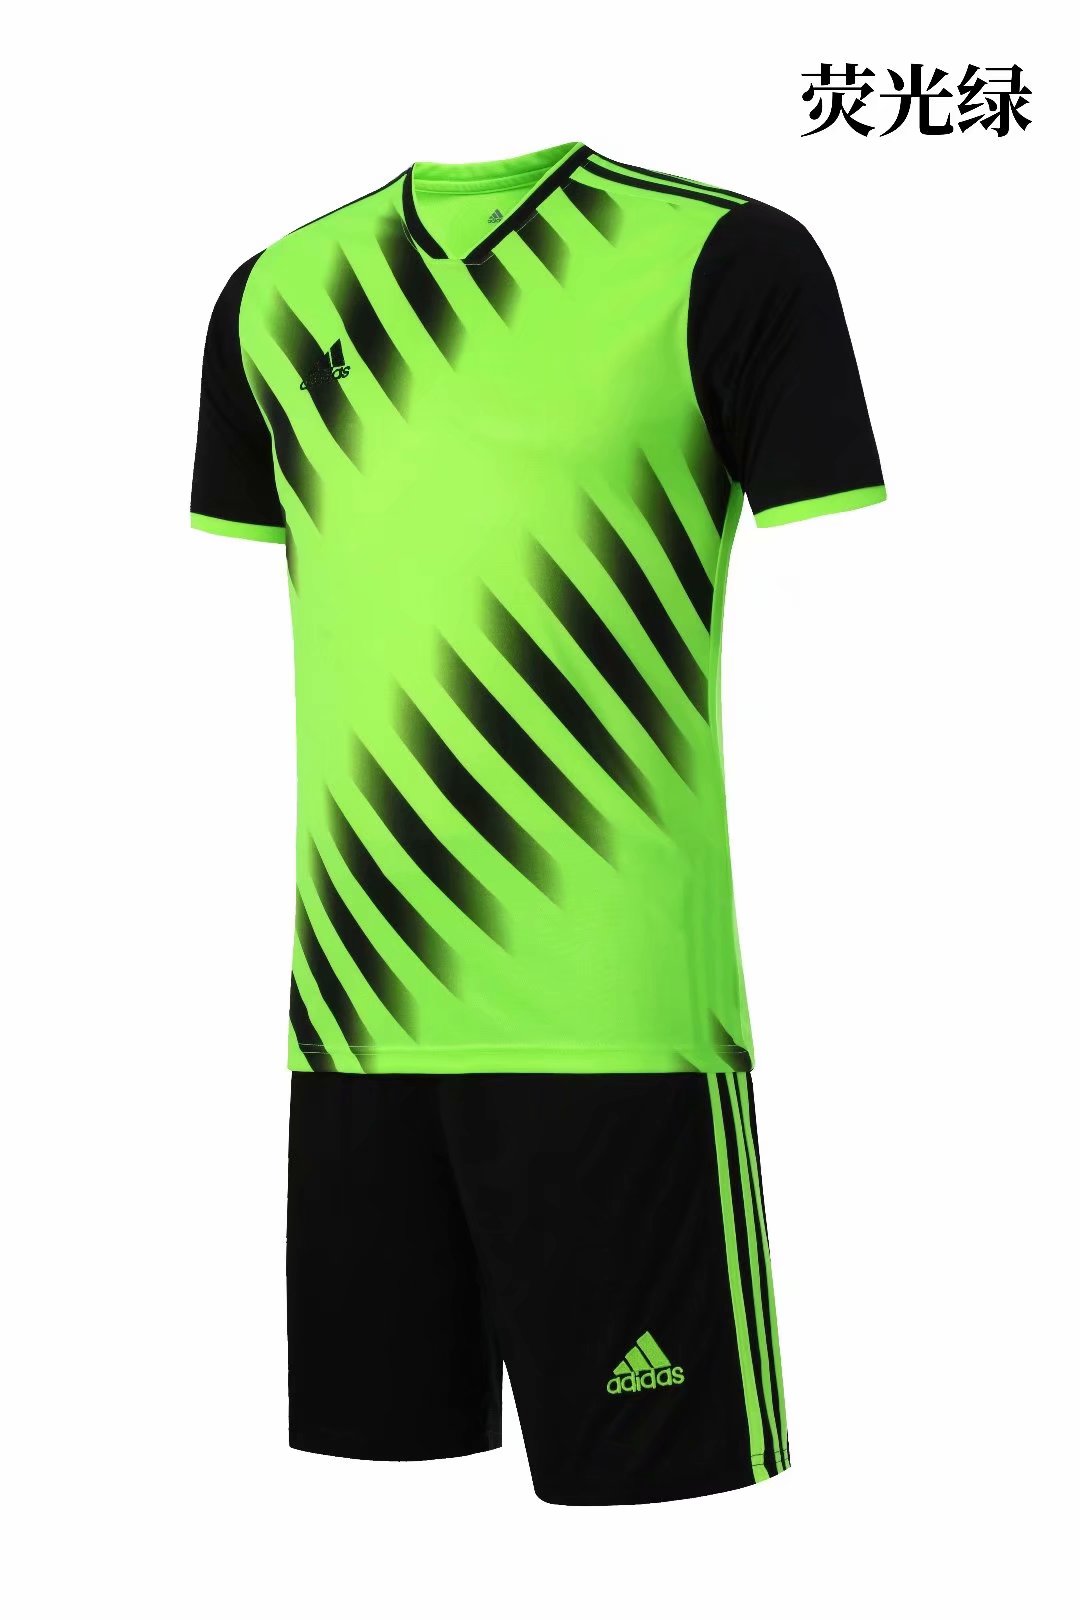 Adidas Soccer Team Uniforms 020